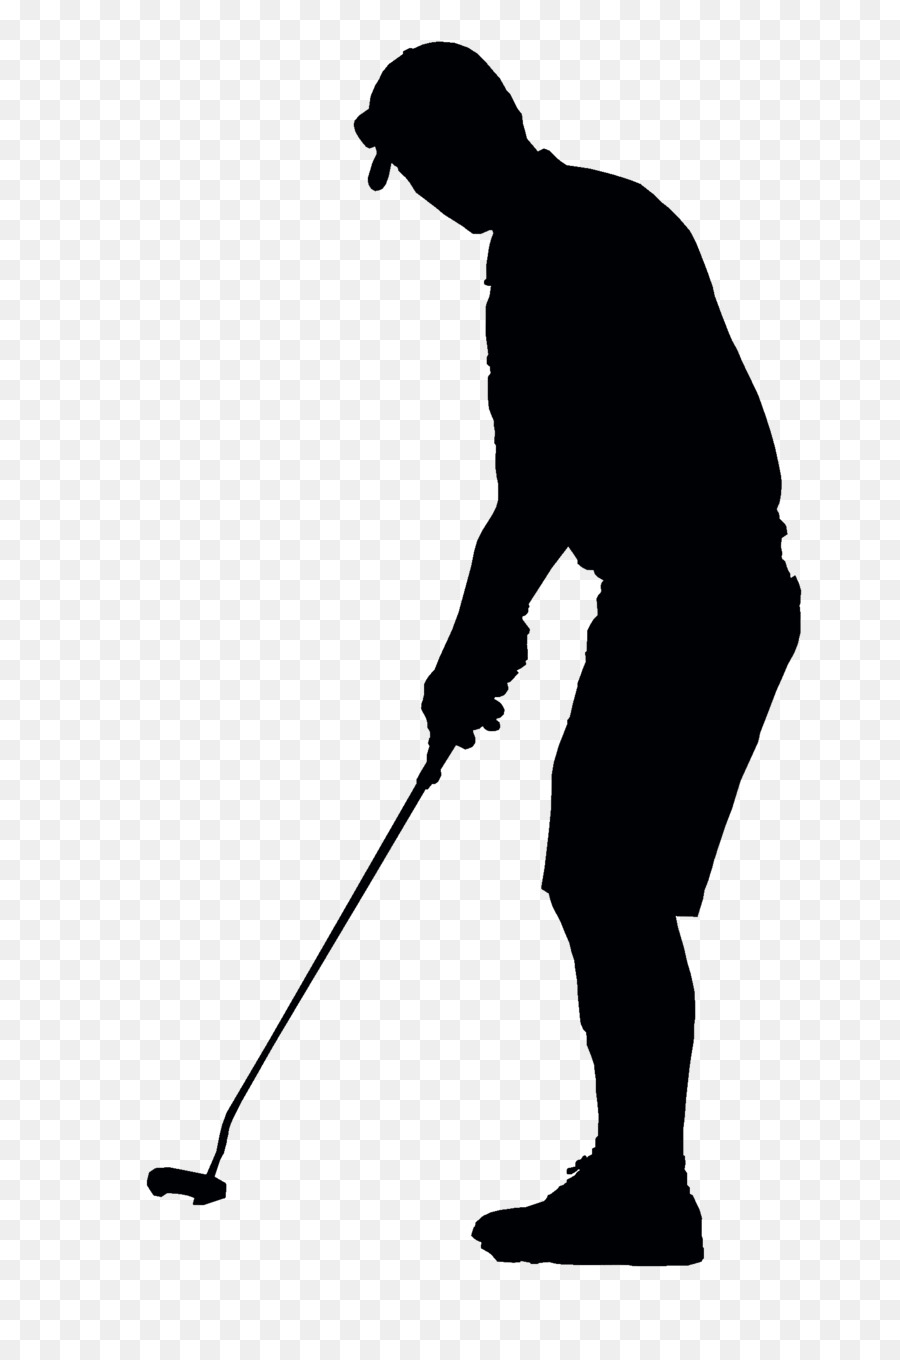 Golf club Clip art - Golfer PNG File png download - 1666*2500 - Free Transparent Golf png Download.